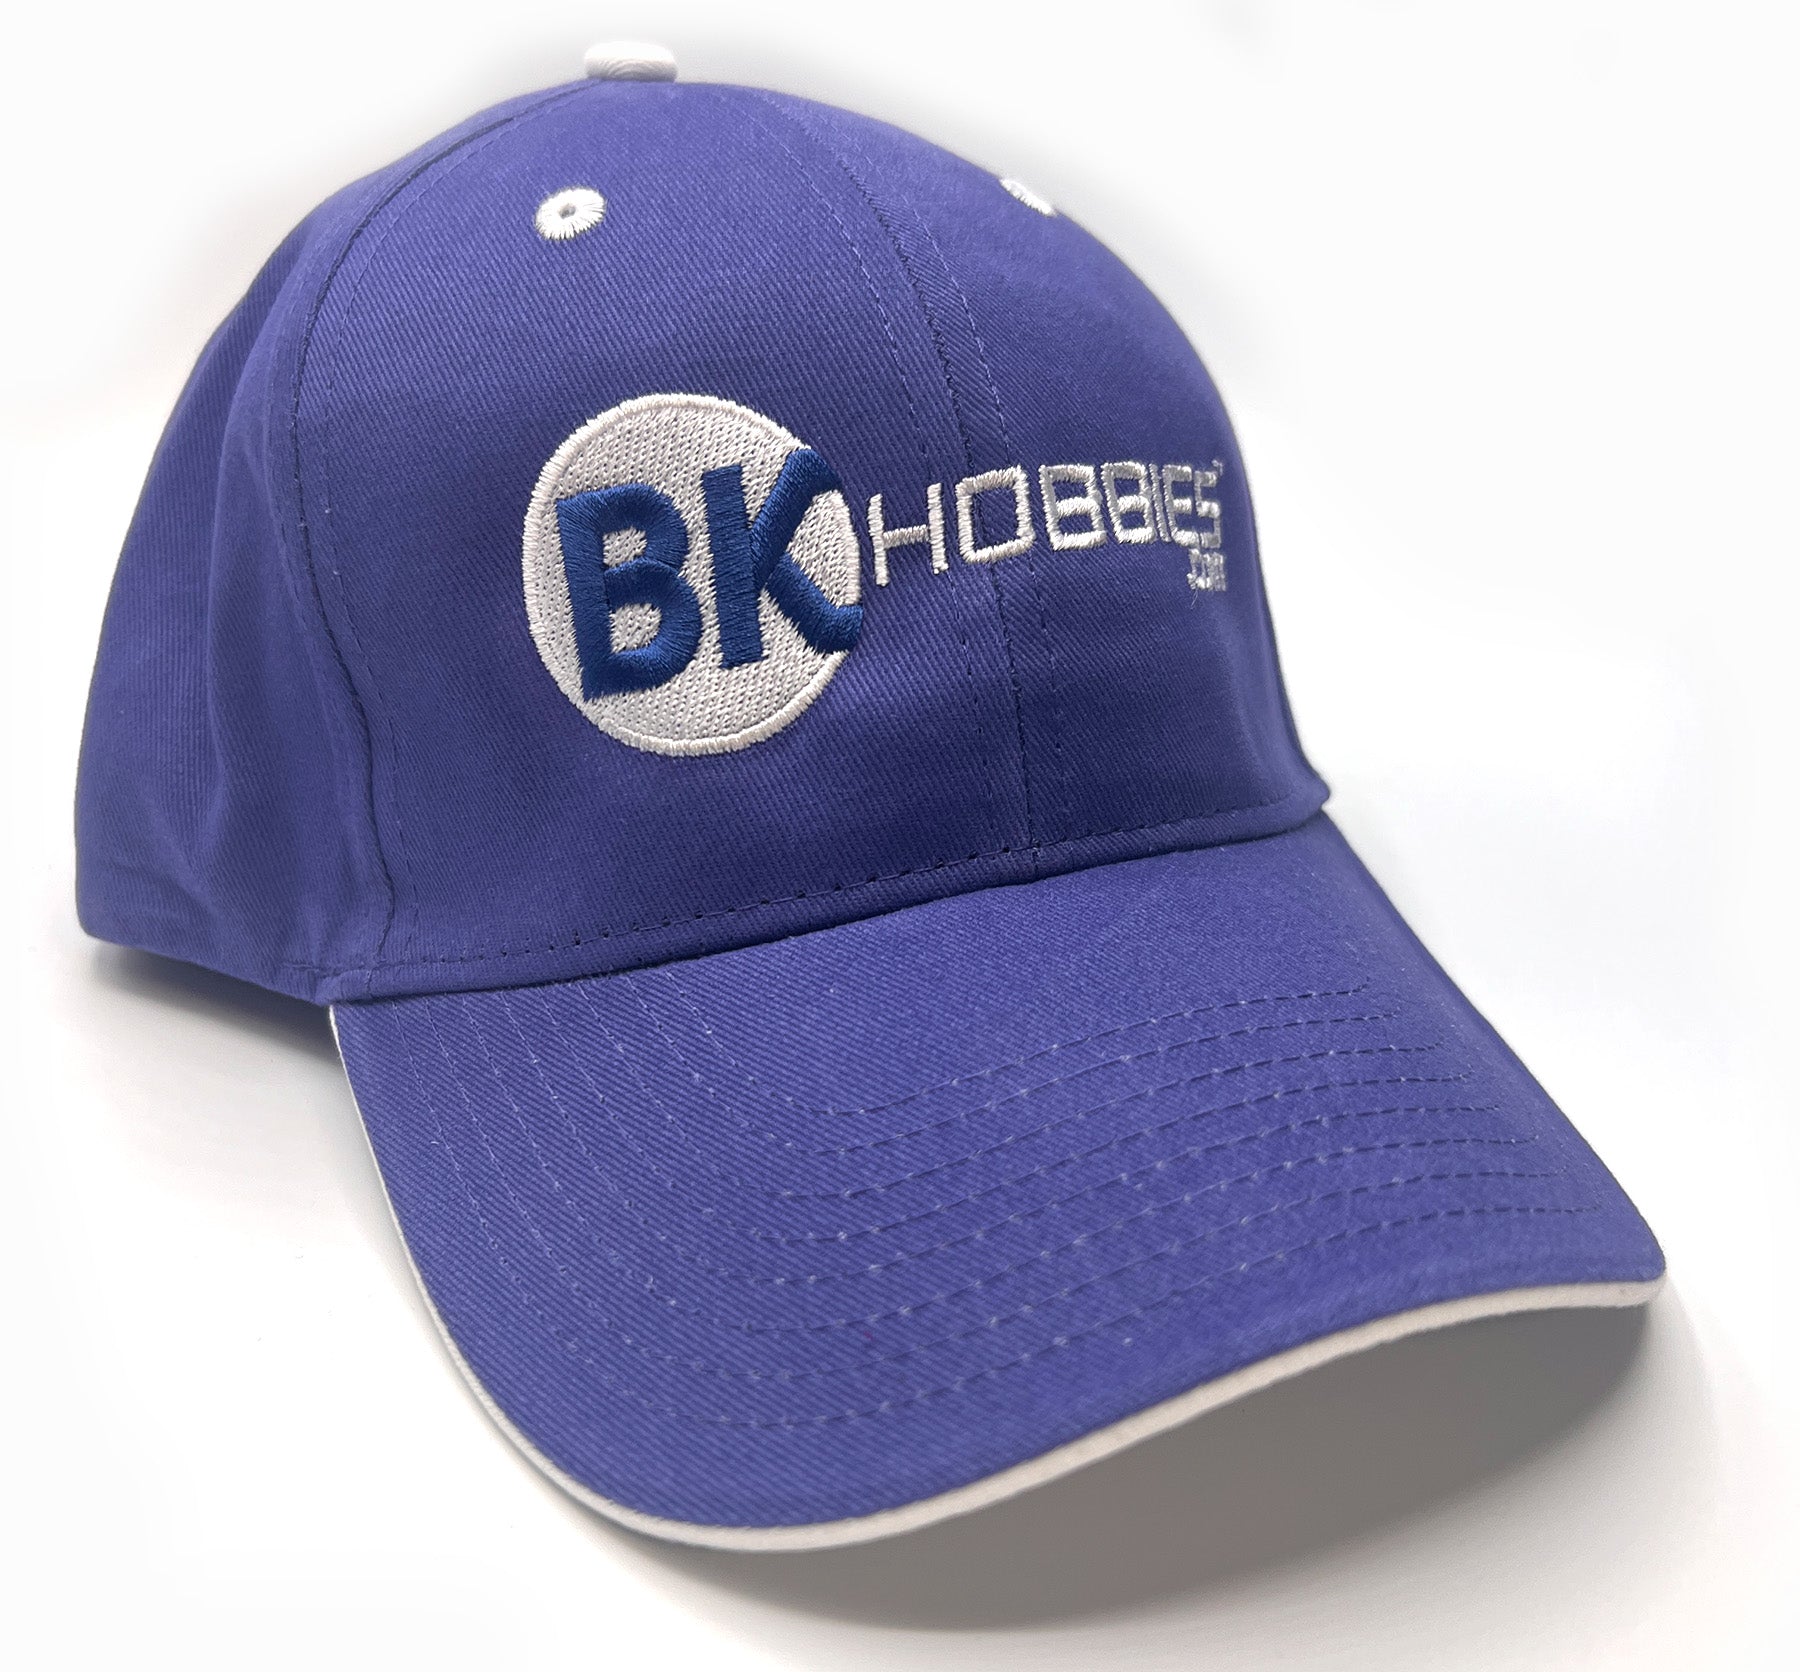 BK Hobbies Embroidered Hat (Blue)